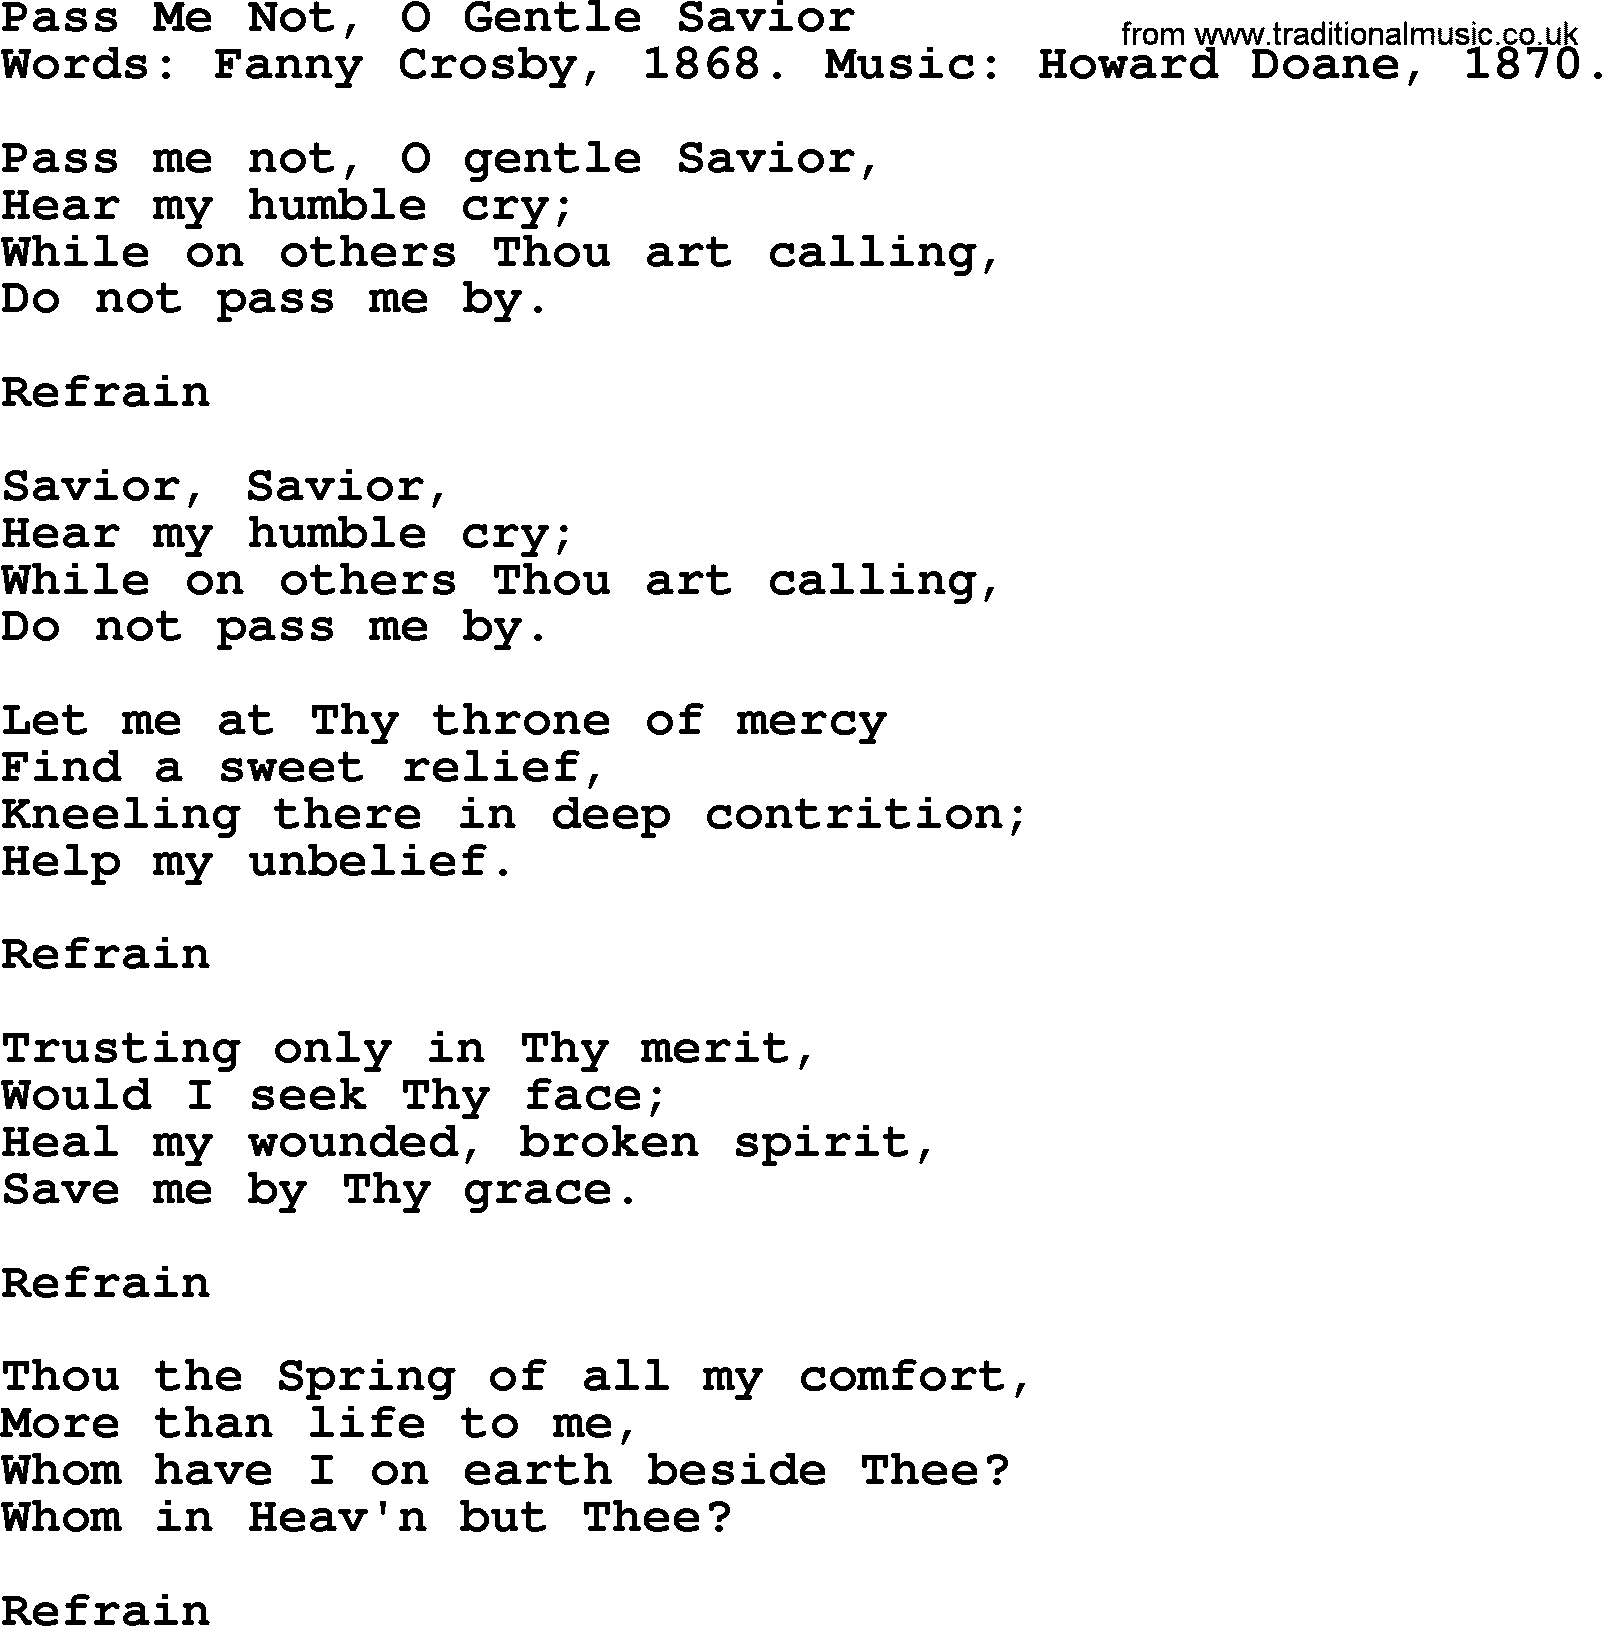 Fanny Crosby song: Pass Me Not, O Gentle Savior, lyrics